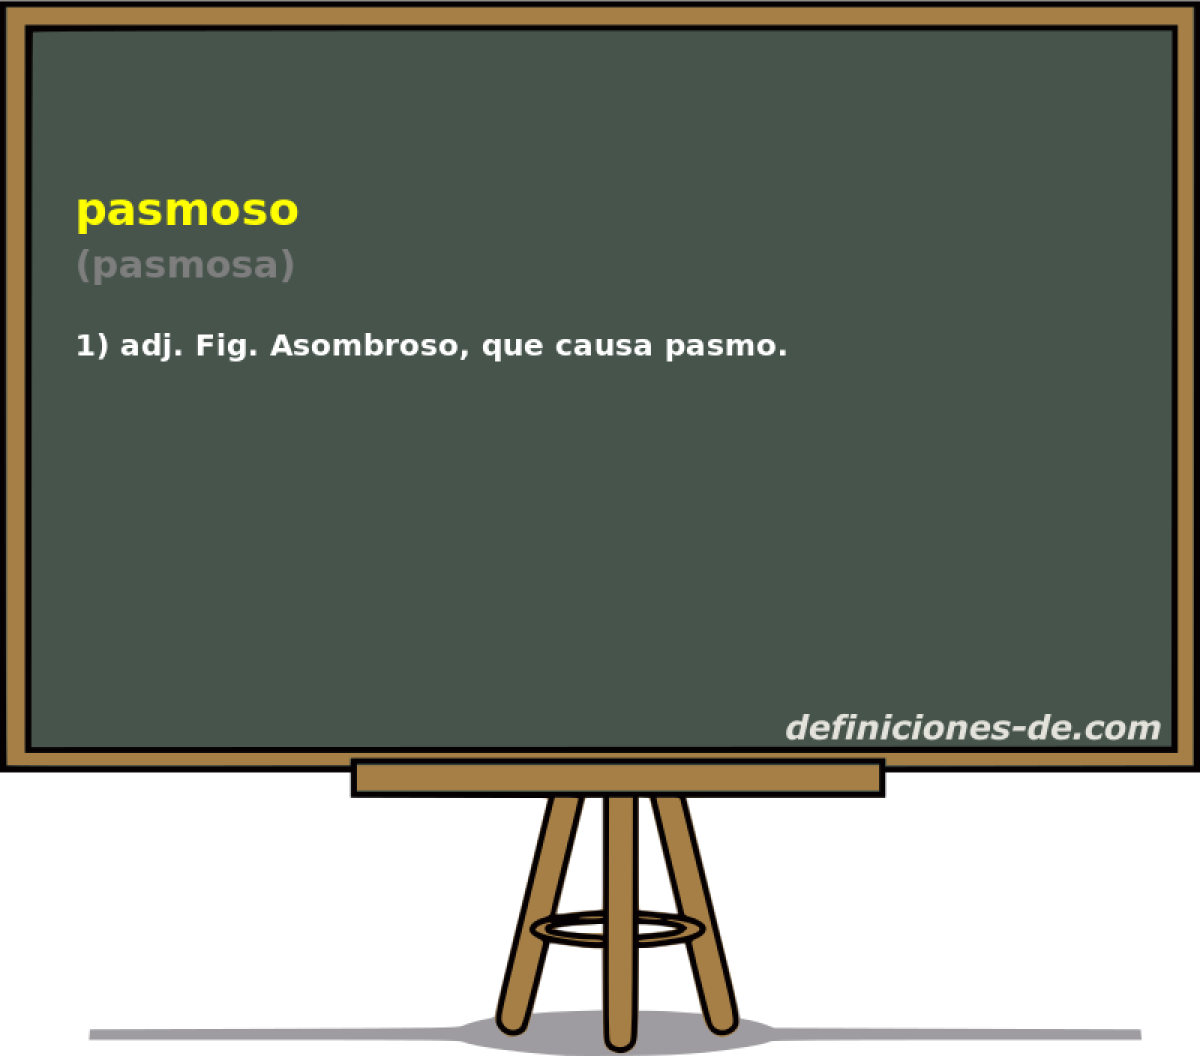 pasmoso (pasmosa)